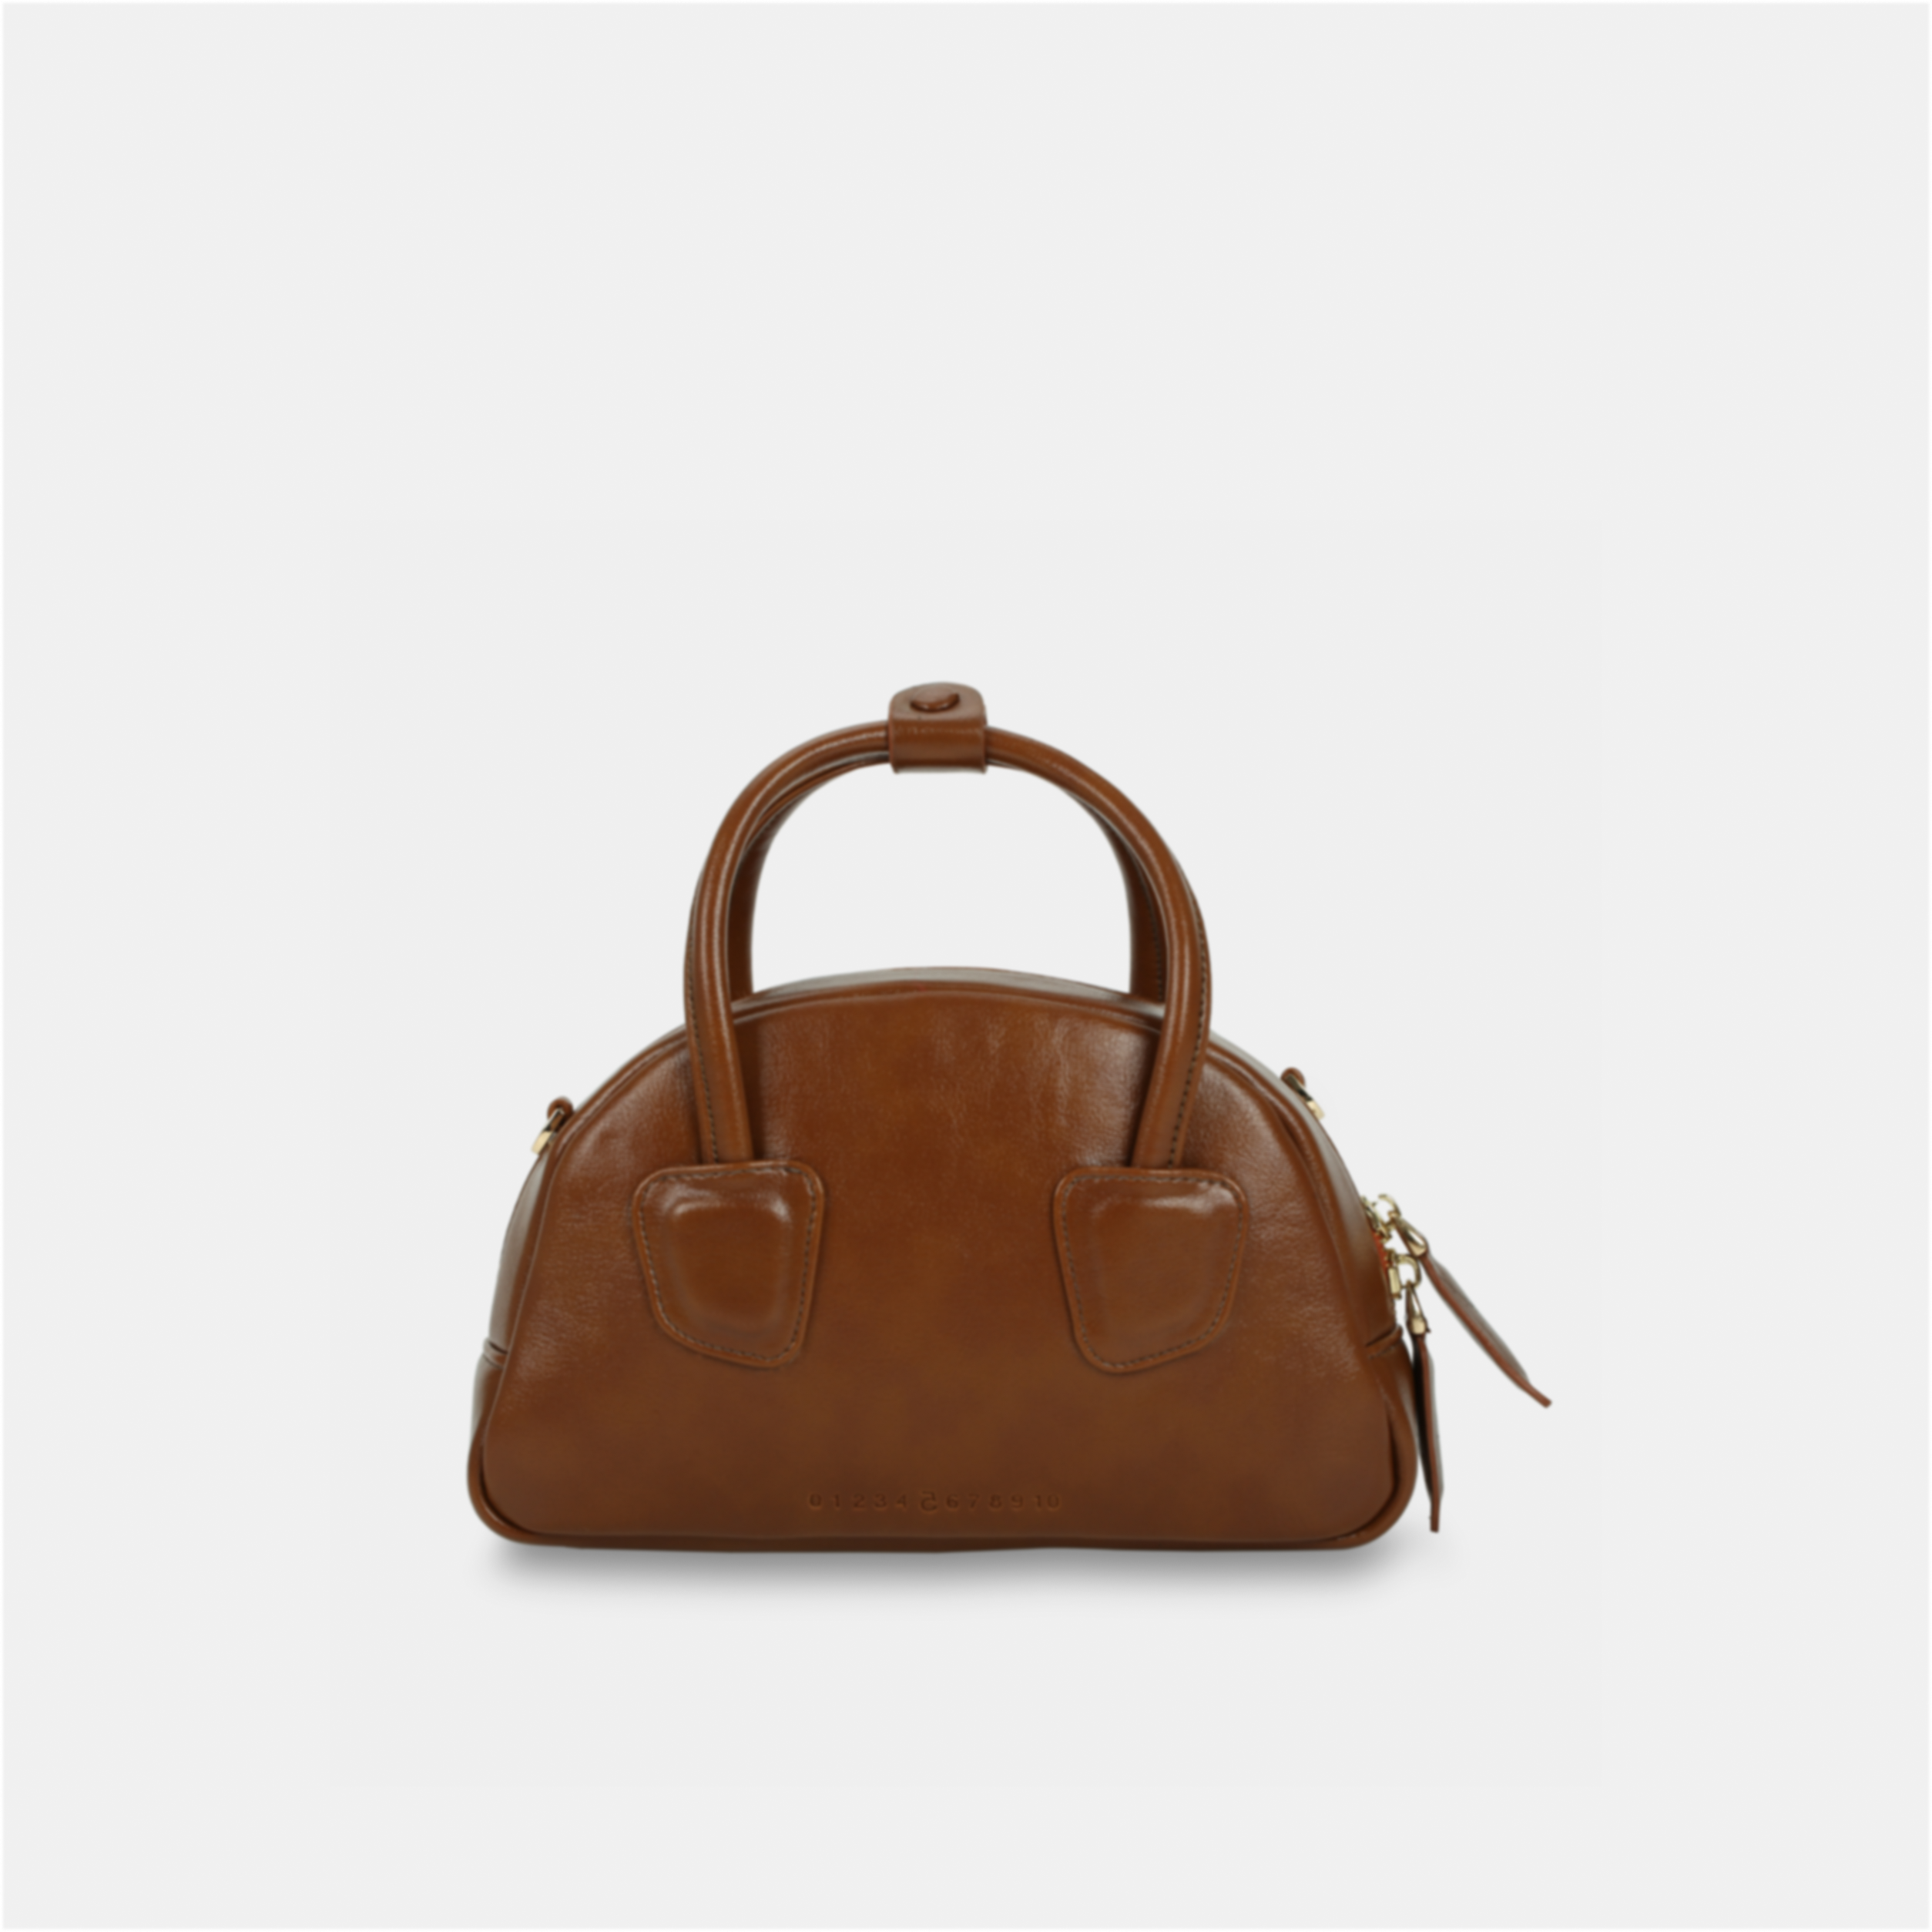 TACOS Handbag in Brown color large size (M)